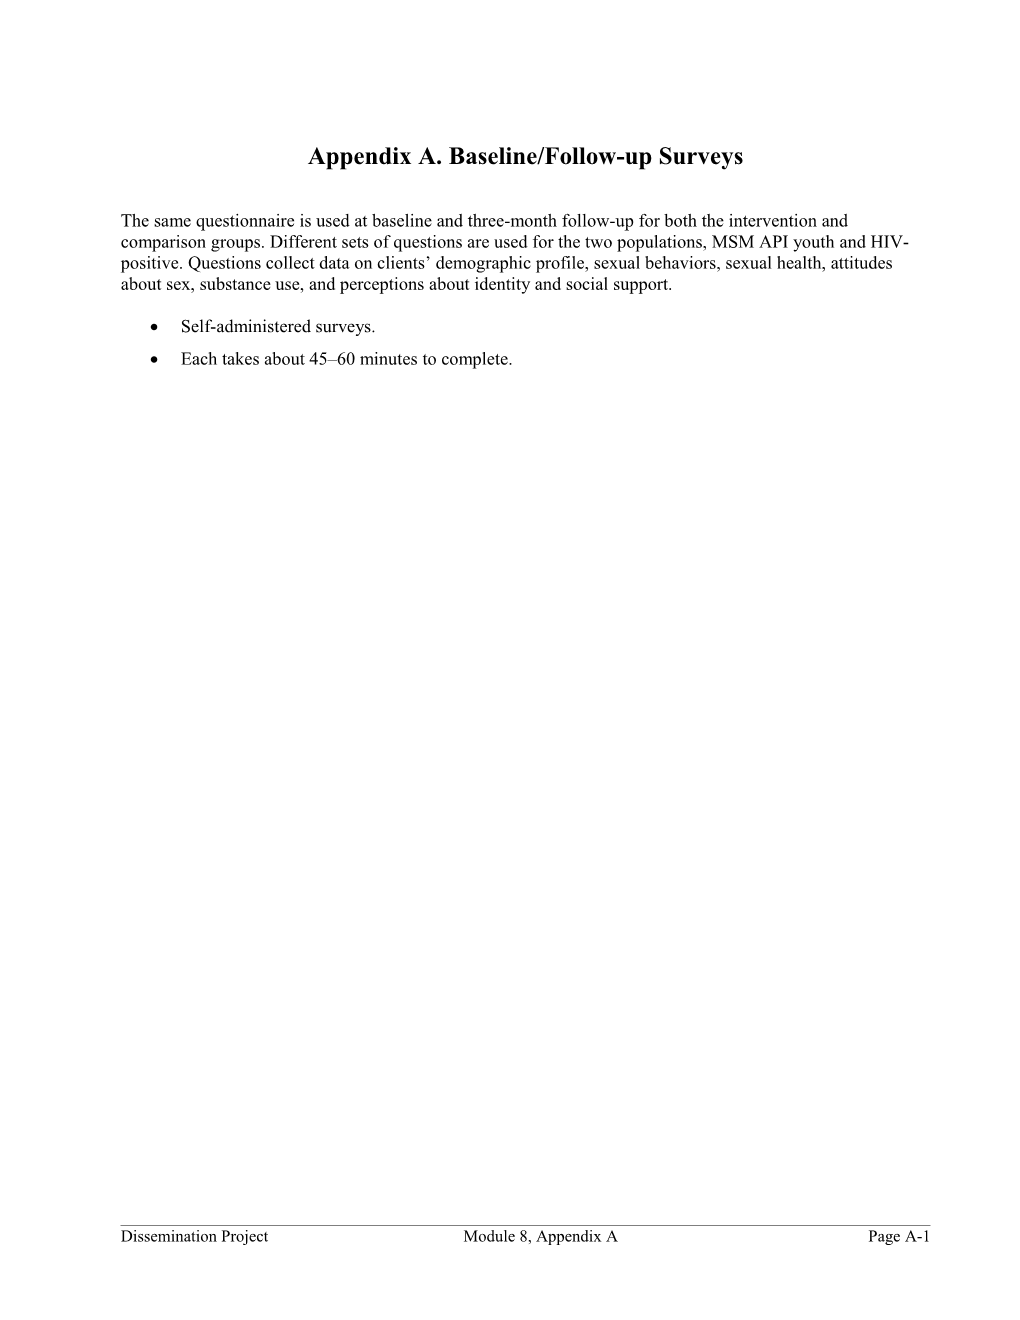 Appendix A. Baseline/Follow-Up Surveys